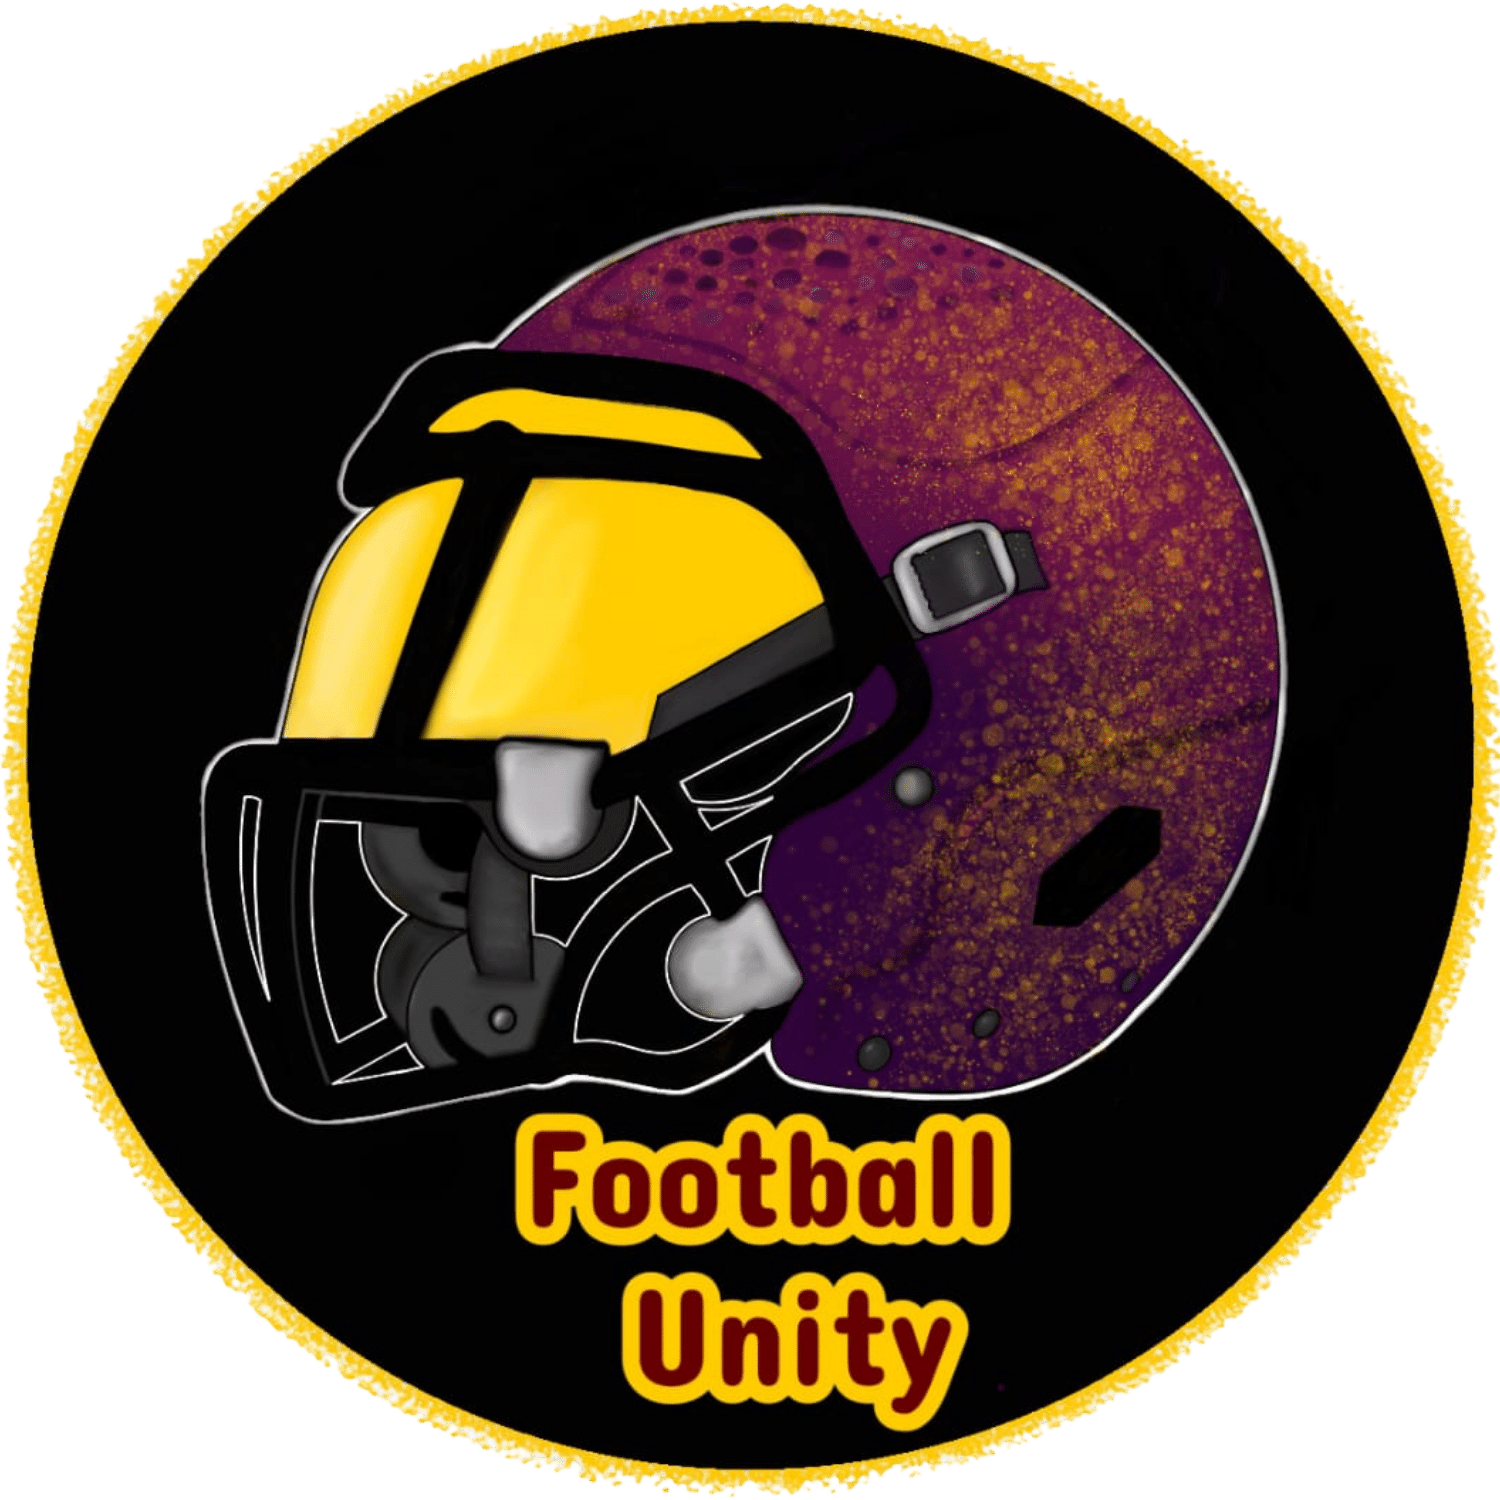 Football Unity